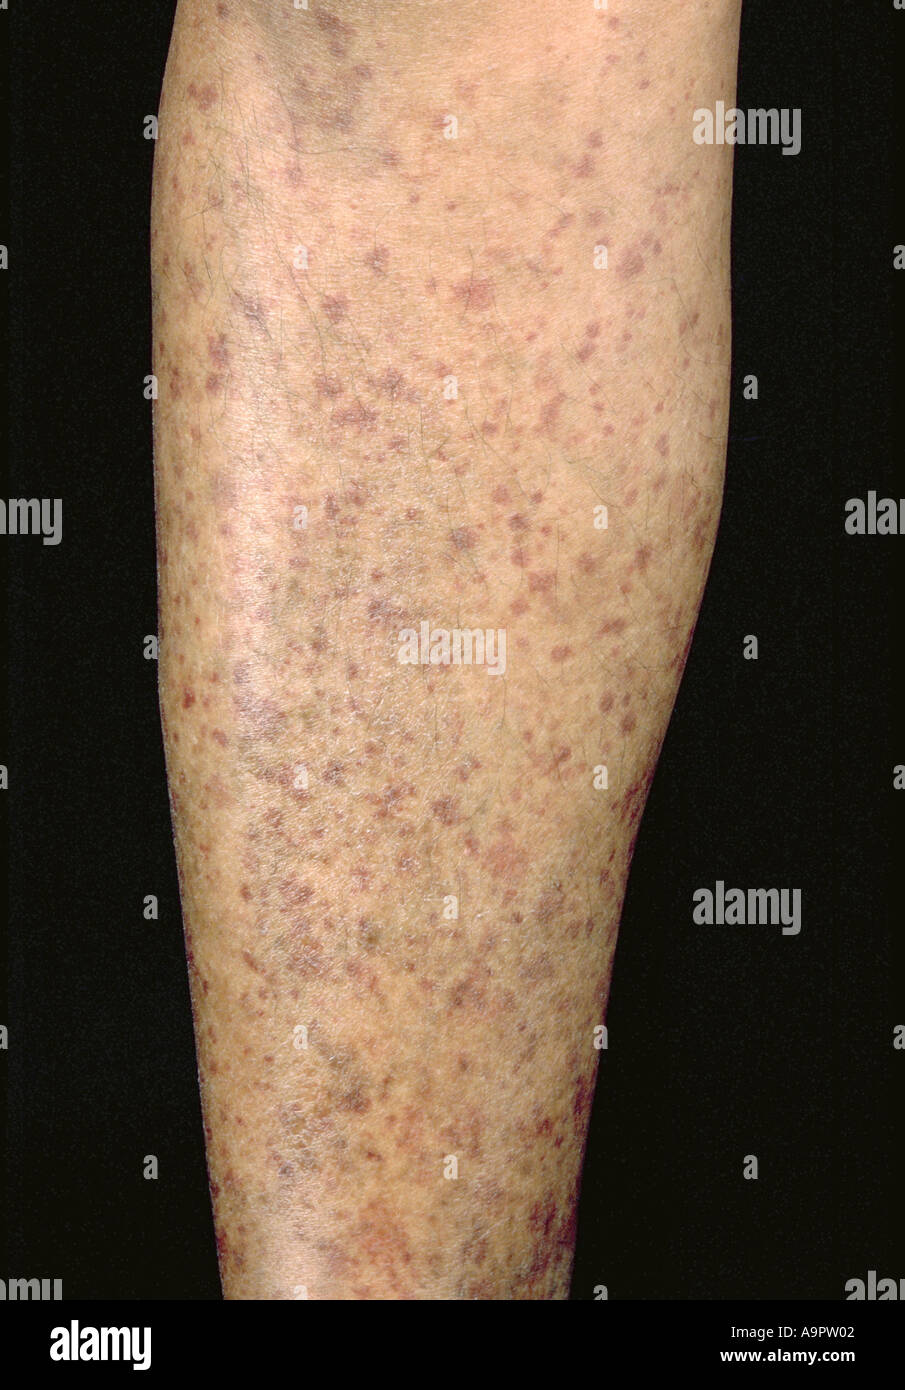 Vasculitic rash Stock Photo